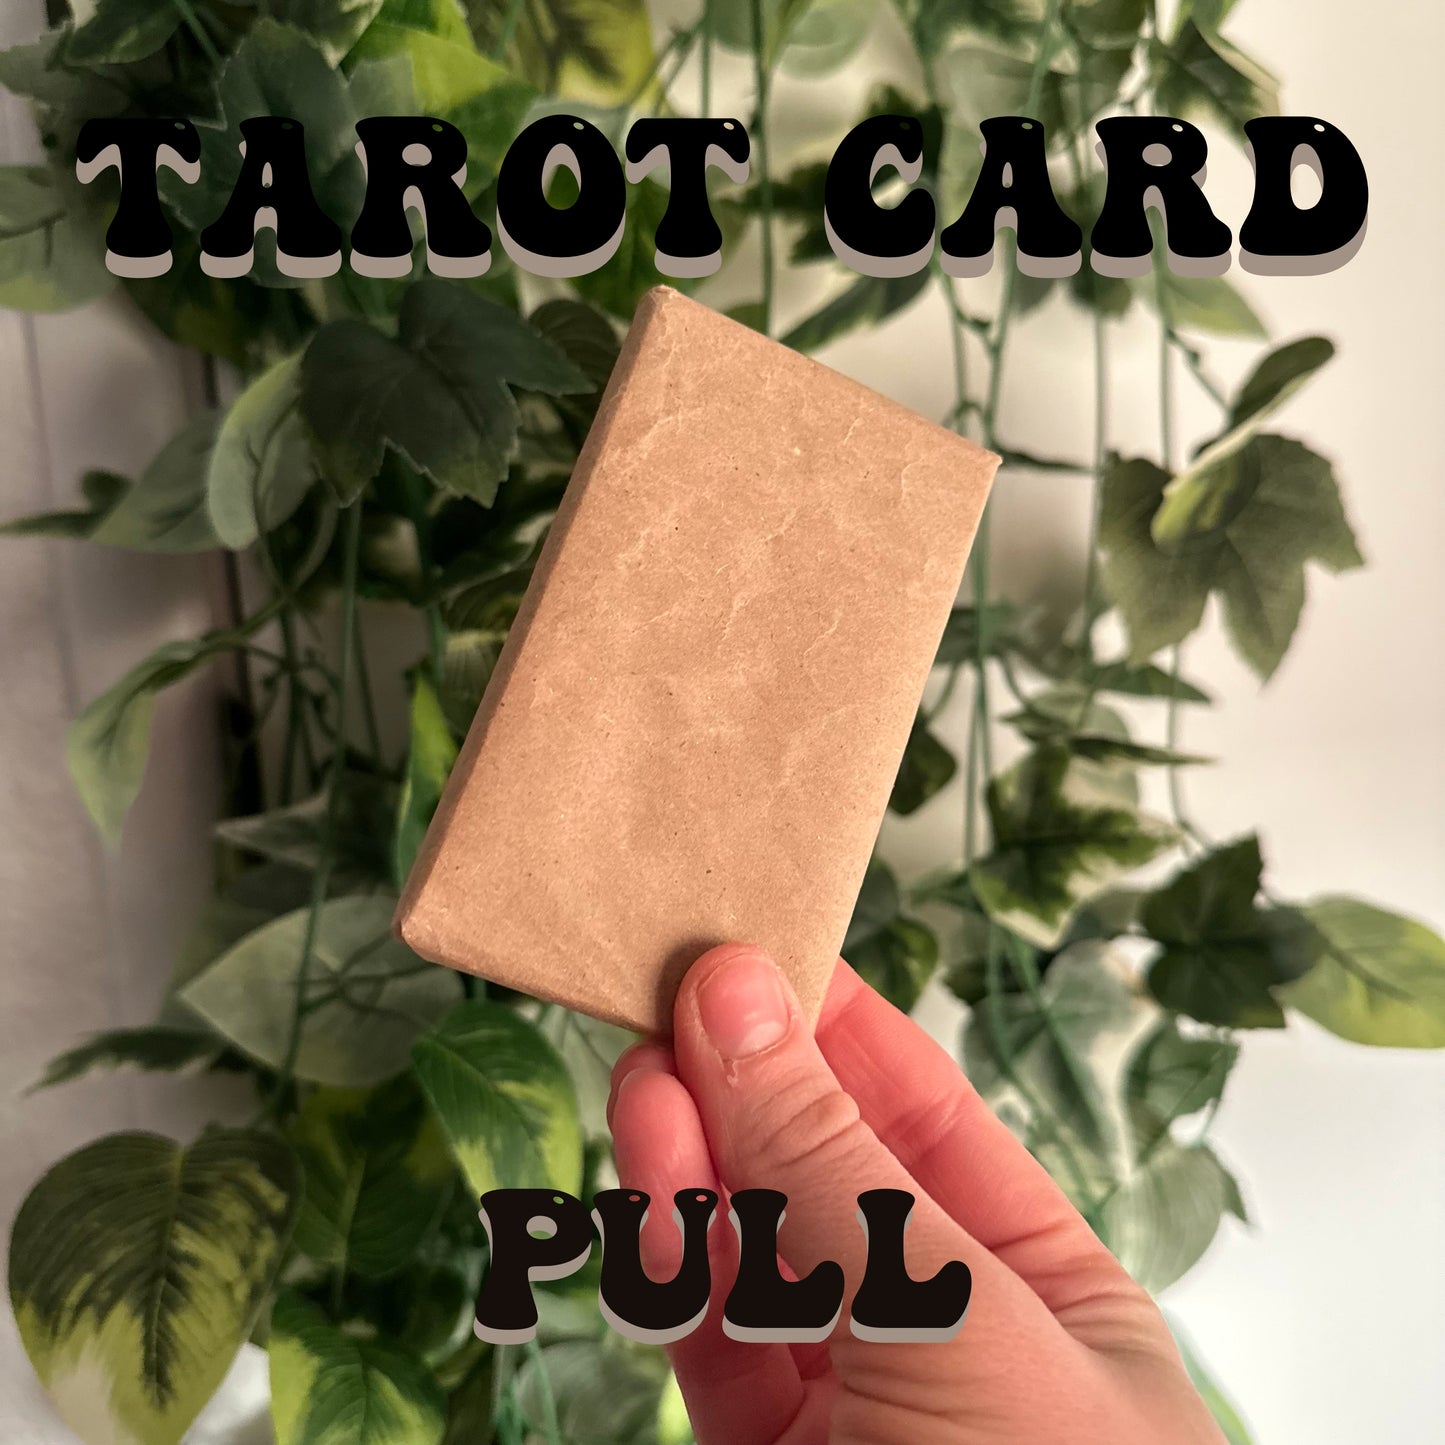 Mystery Tarot Card Pull